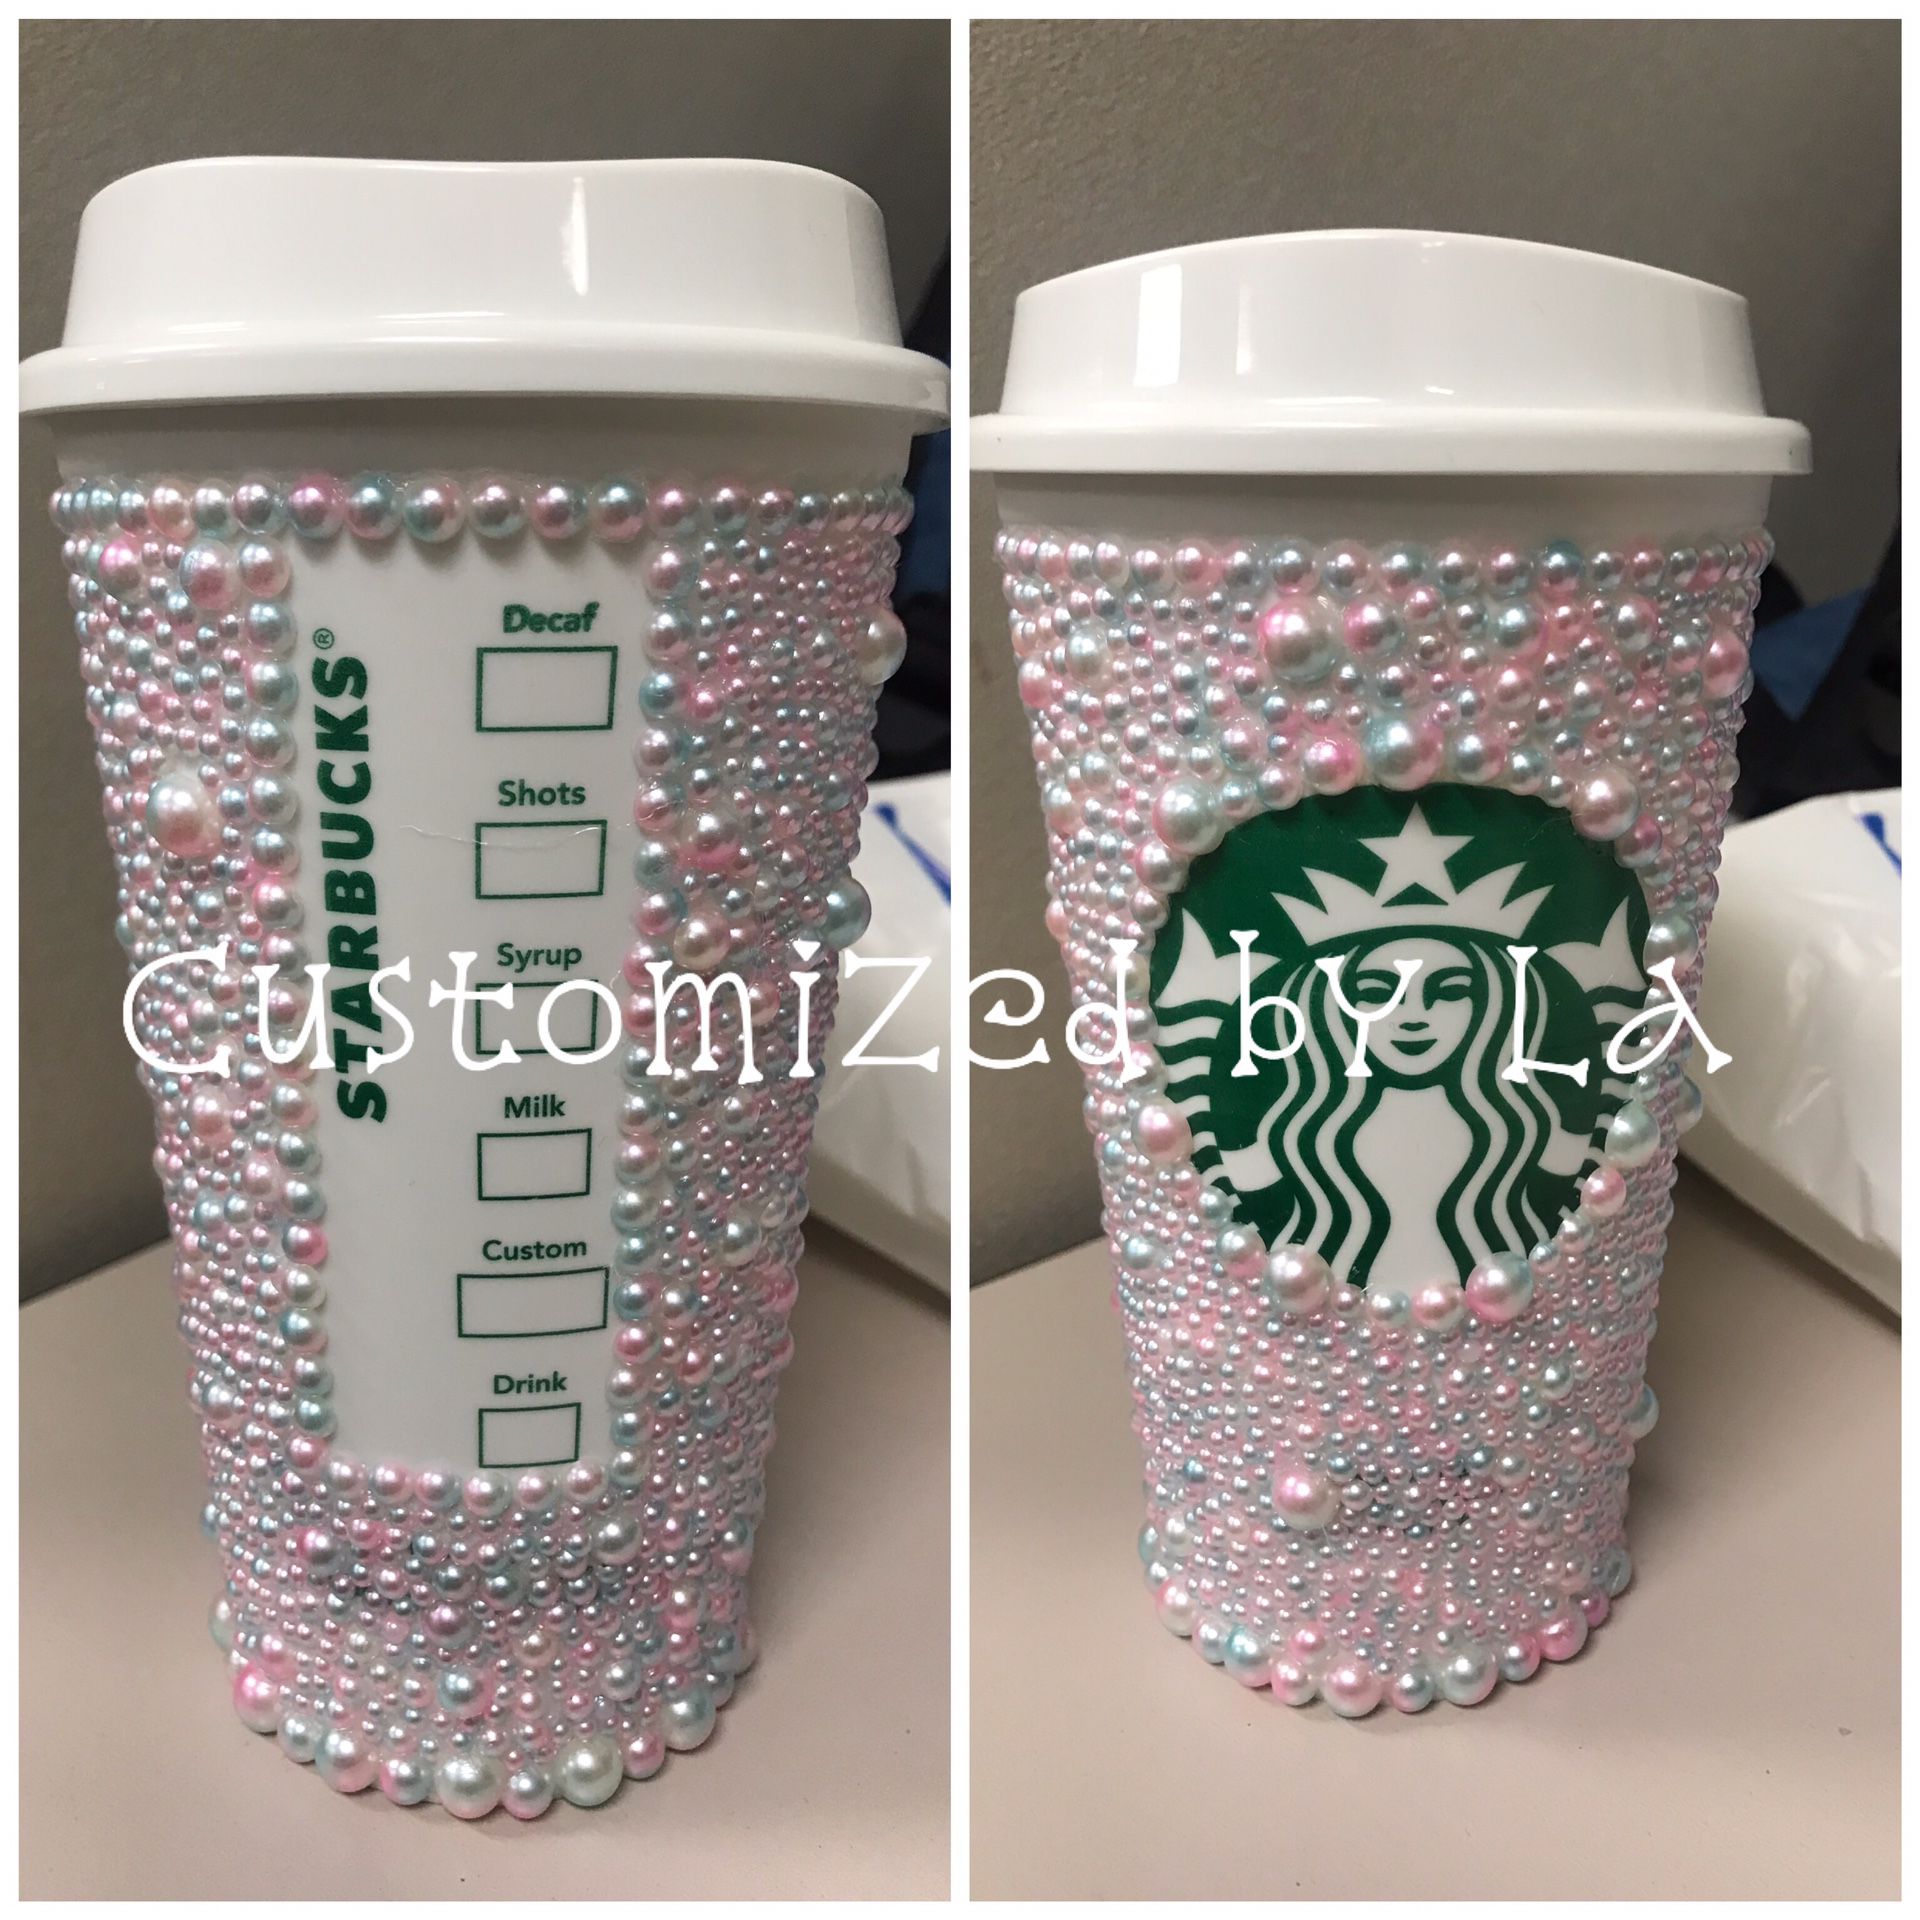 Customized Starbucks cup